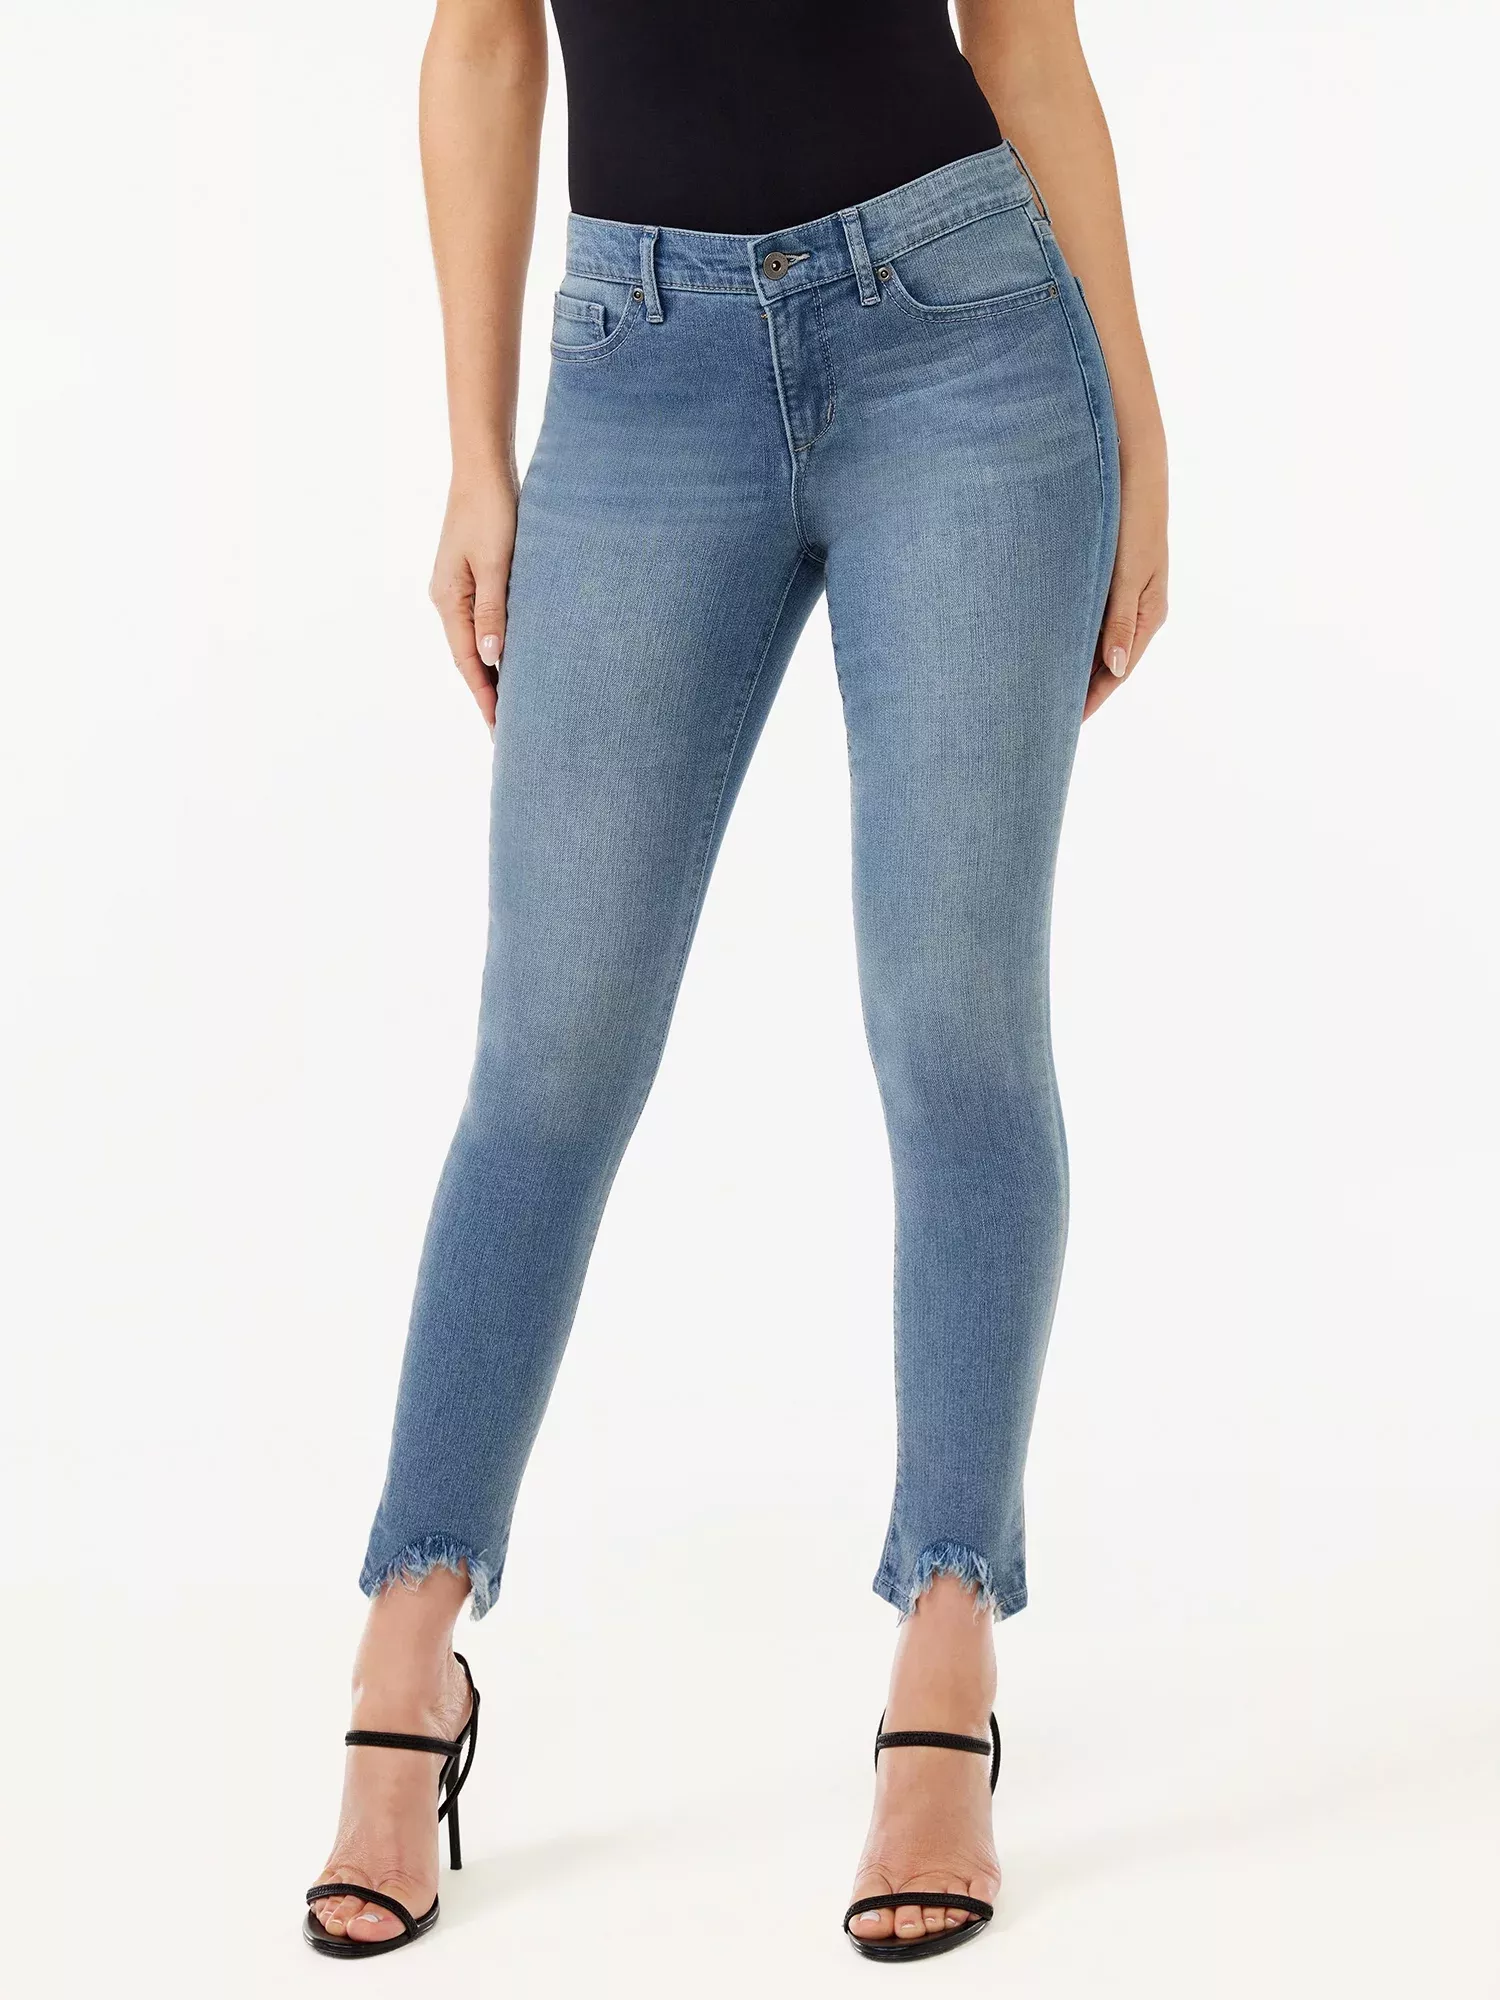 Sofia Jeans Women's Plus Size Faux Wrap Blouse with Short Sleeves, Sizes  1X-5X